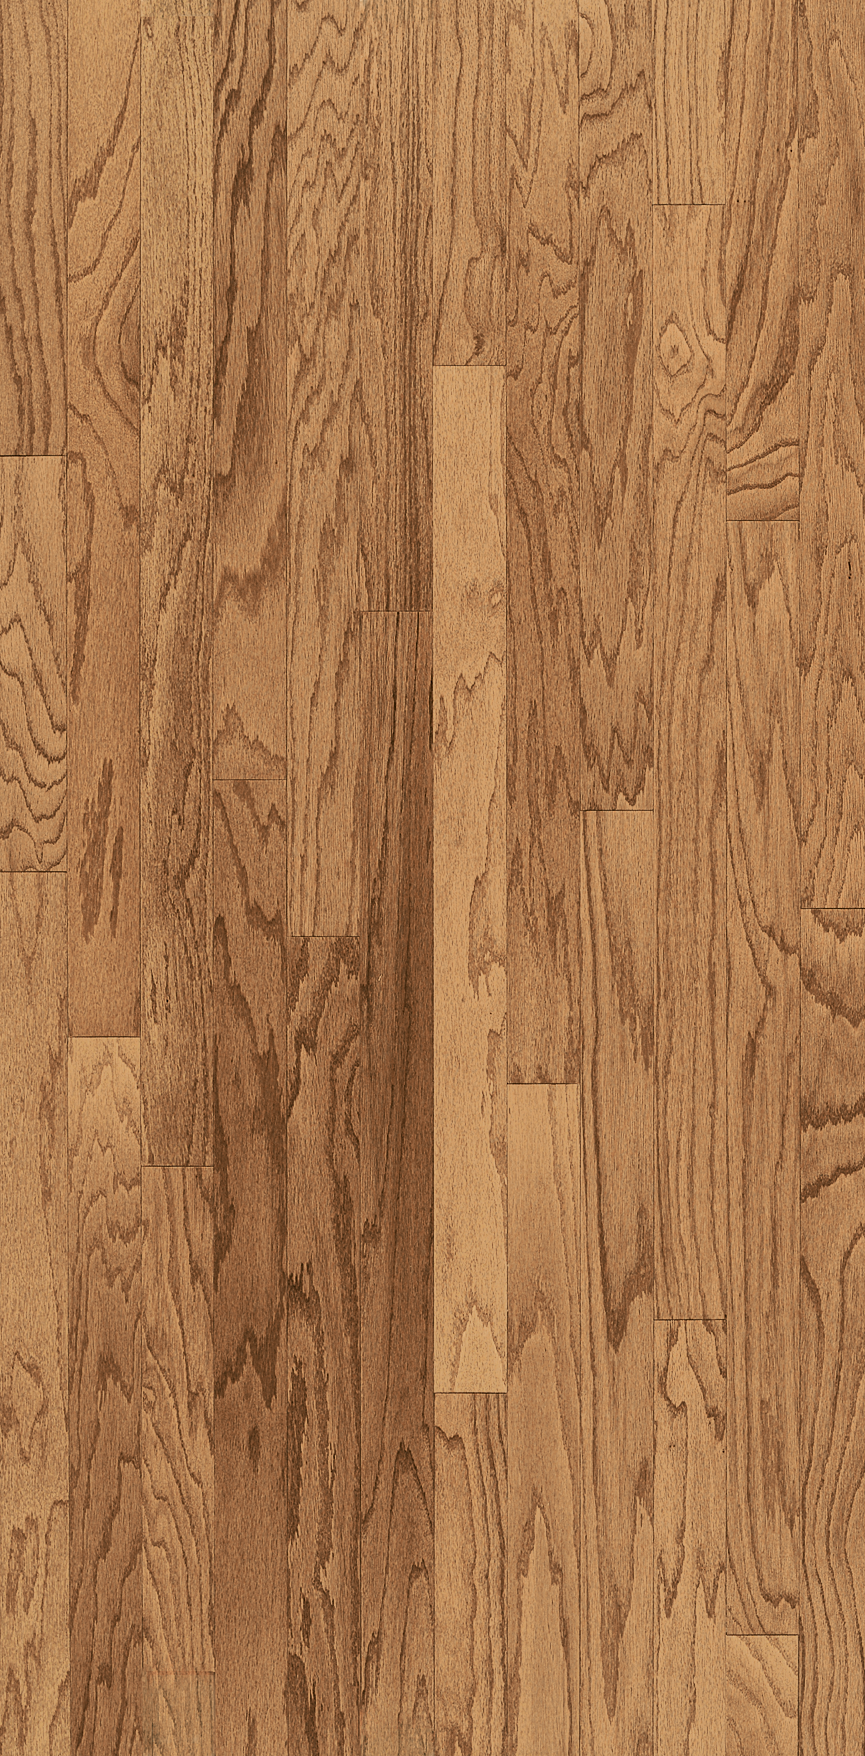 Harvest Oak 3" - Turlington Lock&Fold Collection - Engineered Hardwood Flooring by Bruce